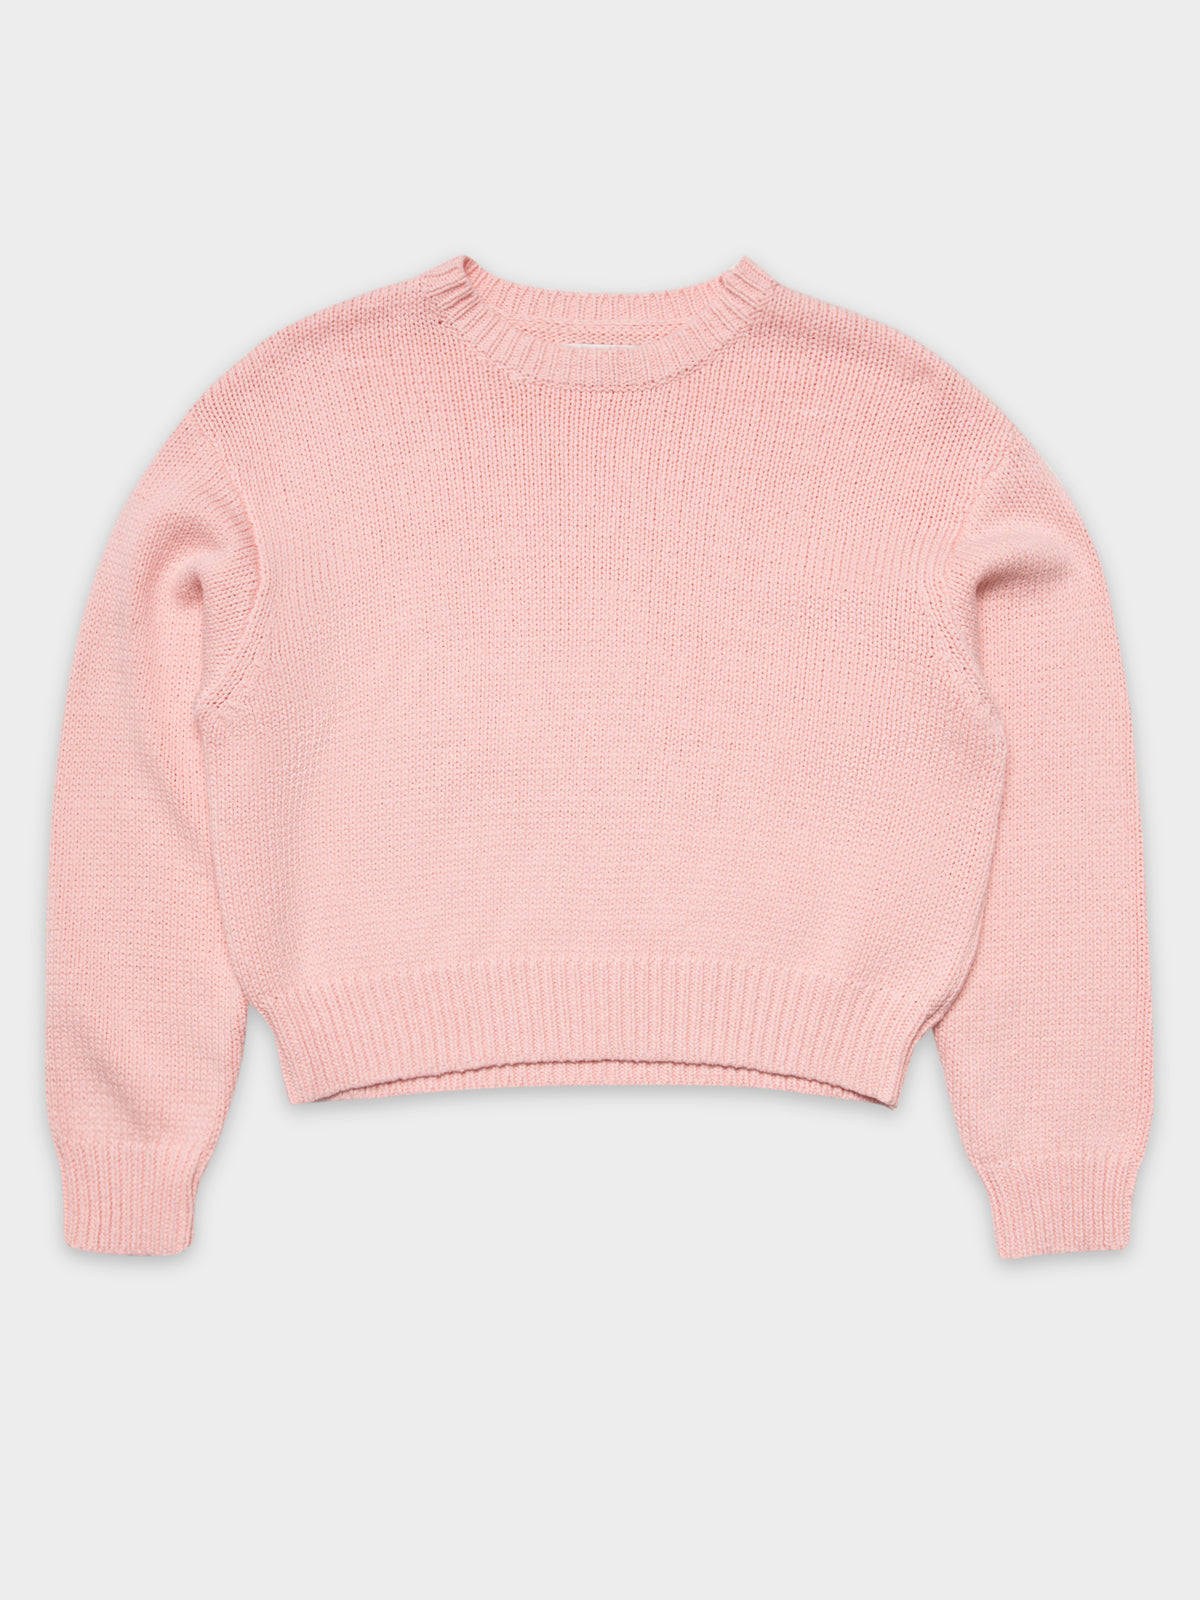 Blair Knit Jumper in Pink Salt